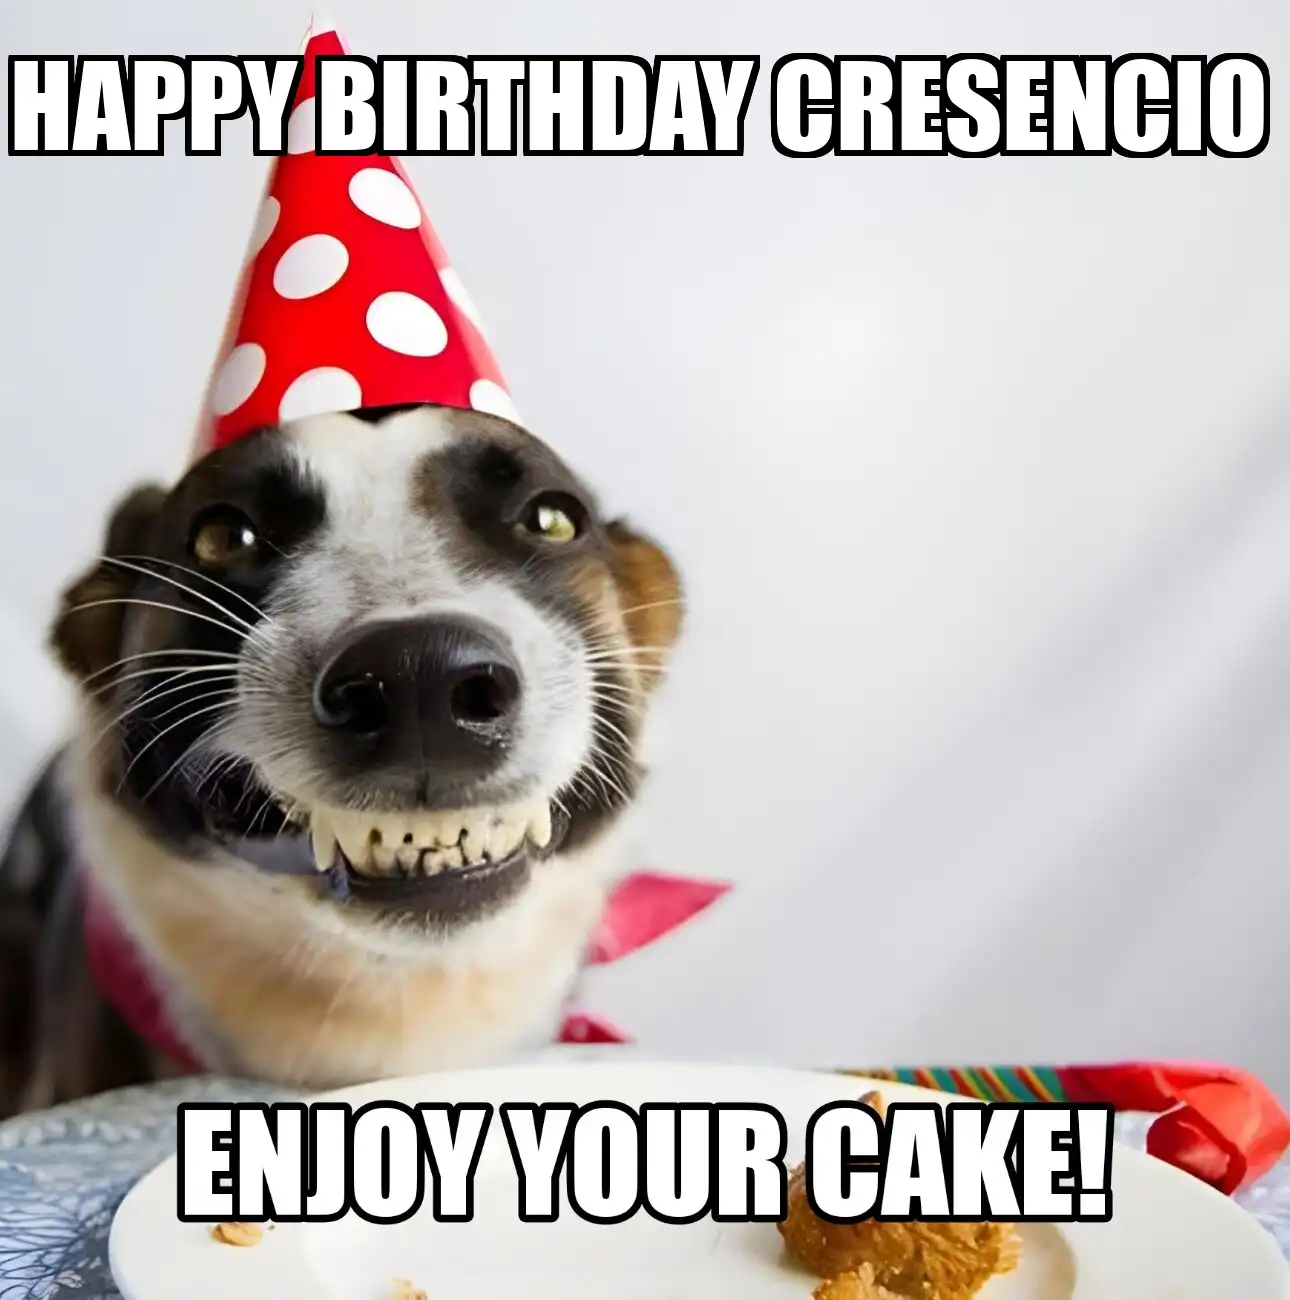 Happy Birthday Cresencio Enjoy Your Cake Dog Meme